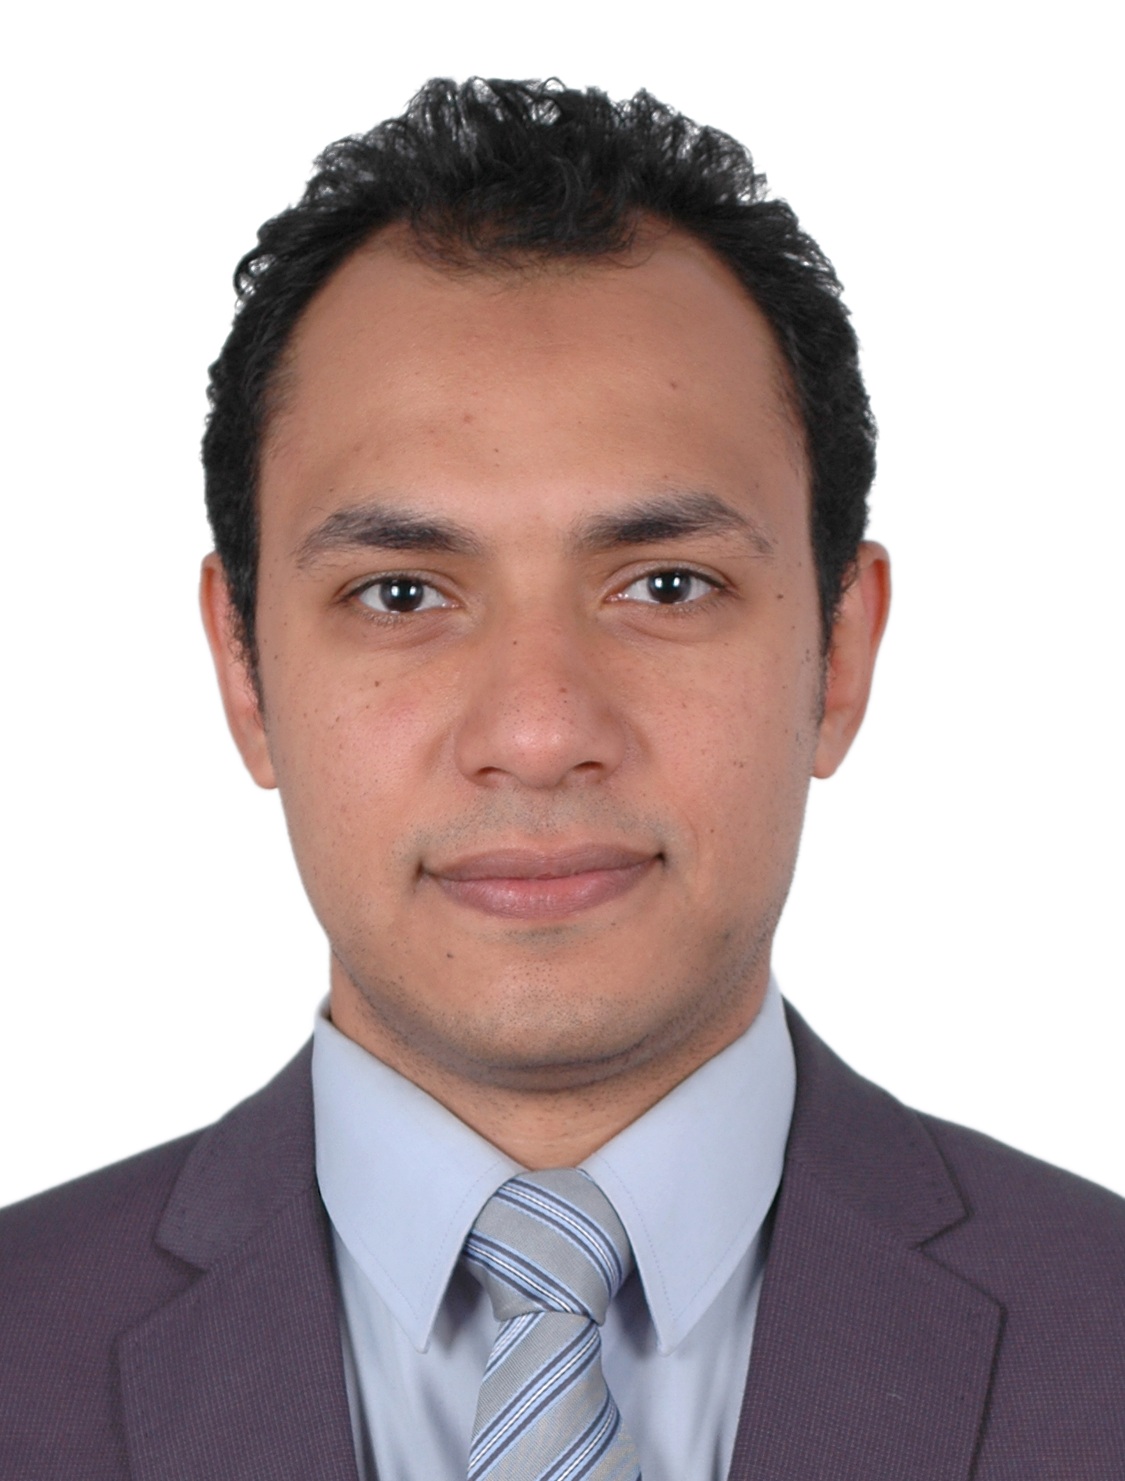 
Dr. Mohamed Ahmed El-Mokhtar Mahmoud Ahmed